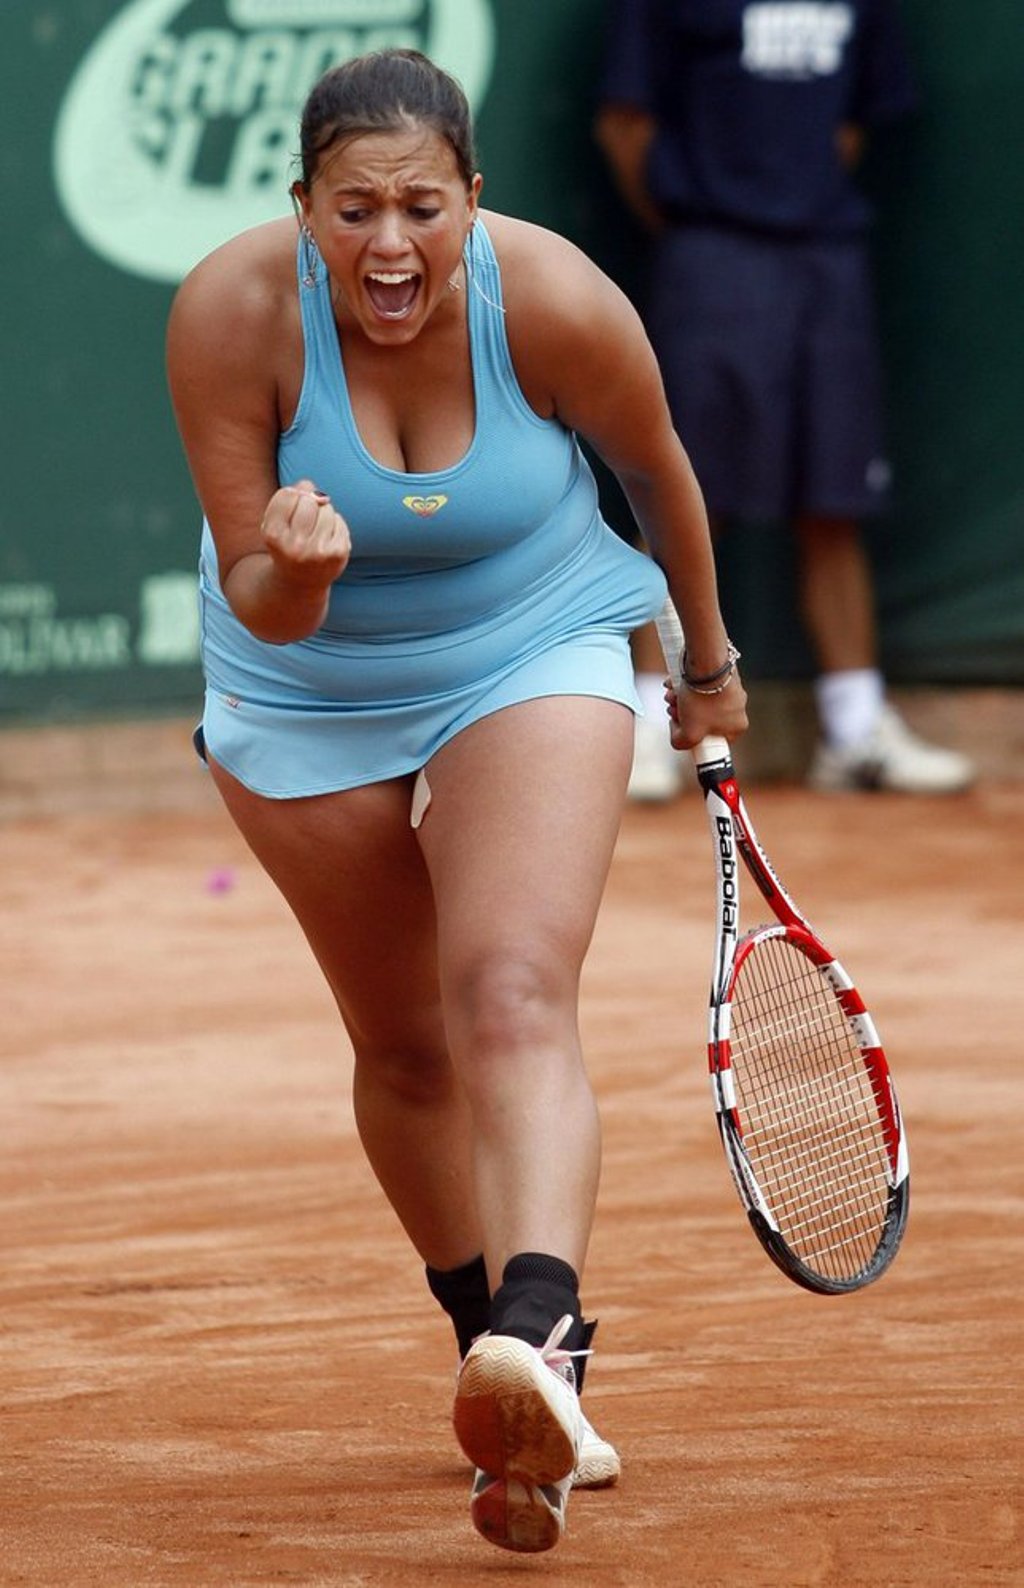 Best of Big boobs tennis player